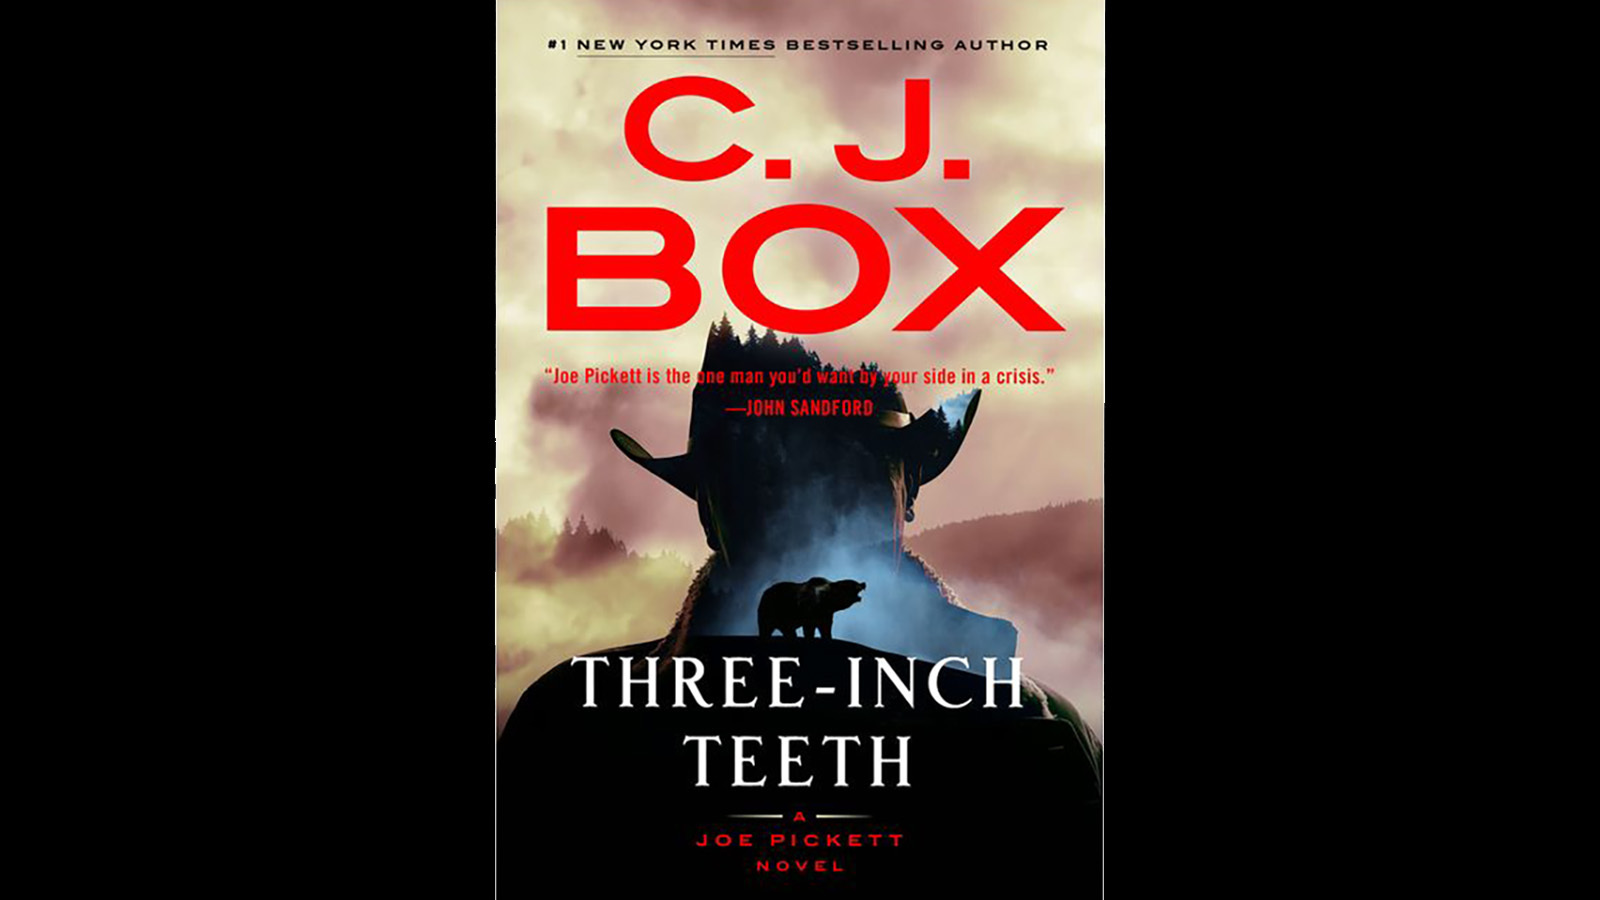 New C.J. Box “Joe Pickett” Novel About Rogue Grizzly Bear Comes